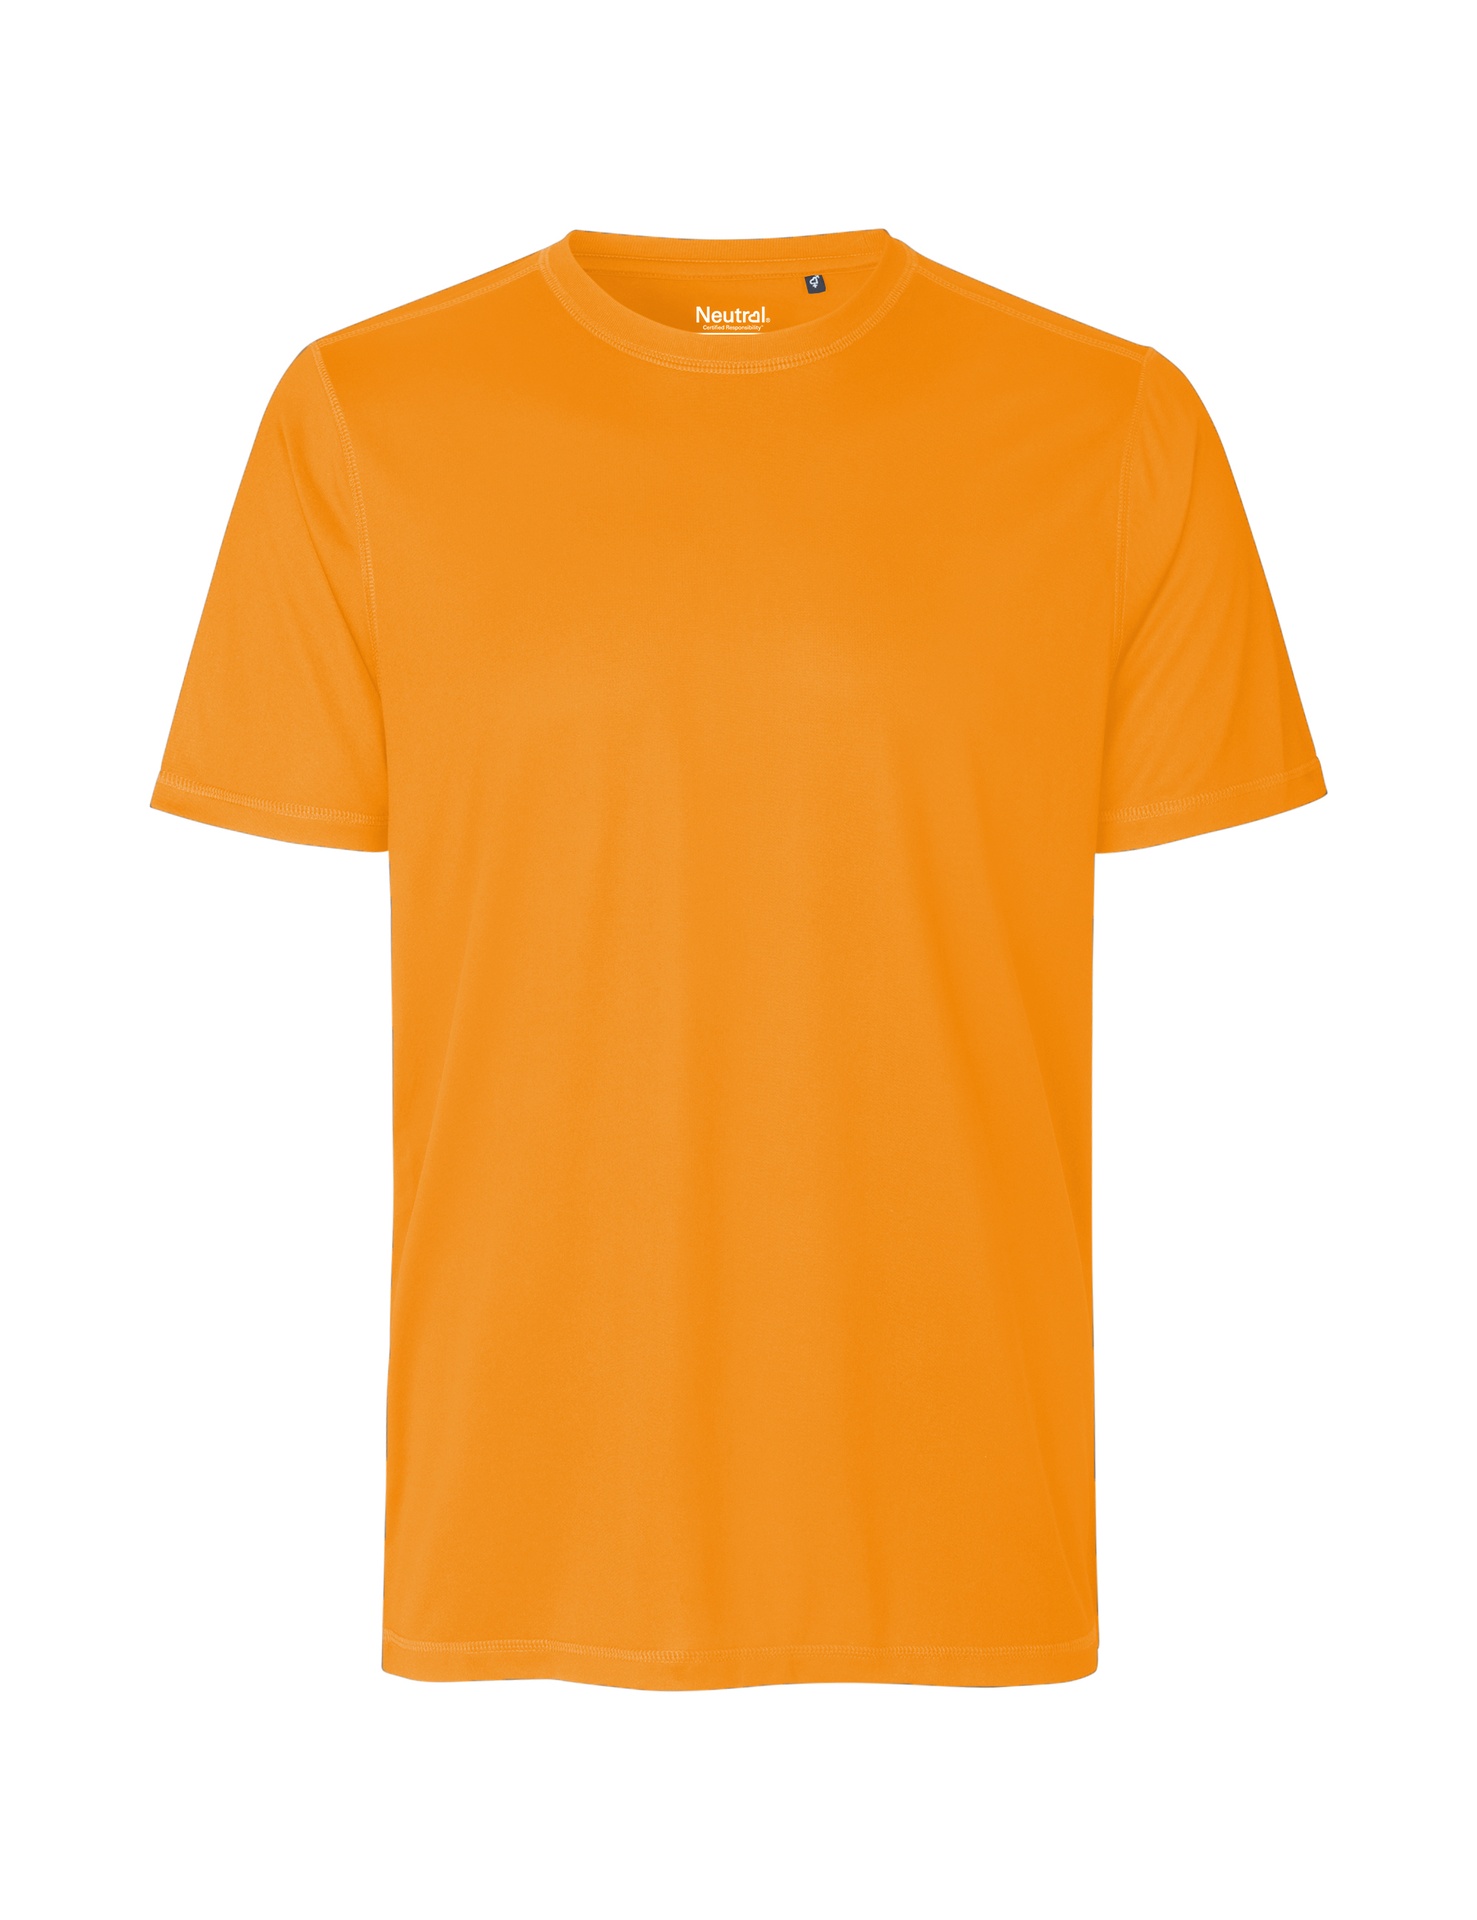 [PR/03791] Recycled Performance T-Shirt (Okay Orange 31, M)